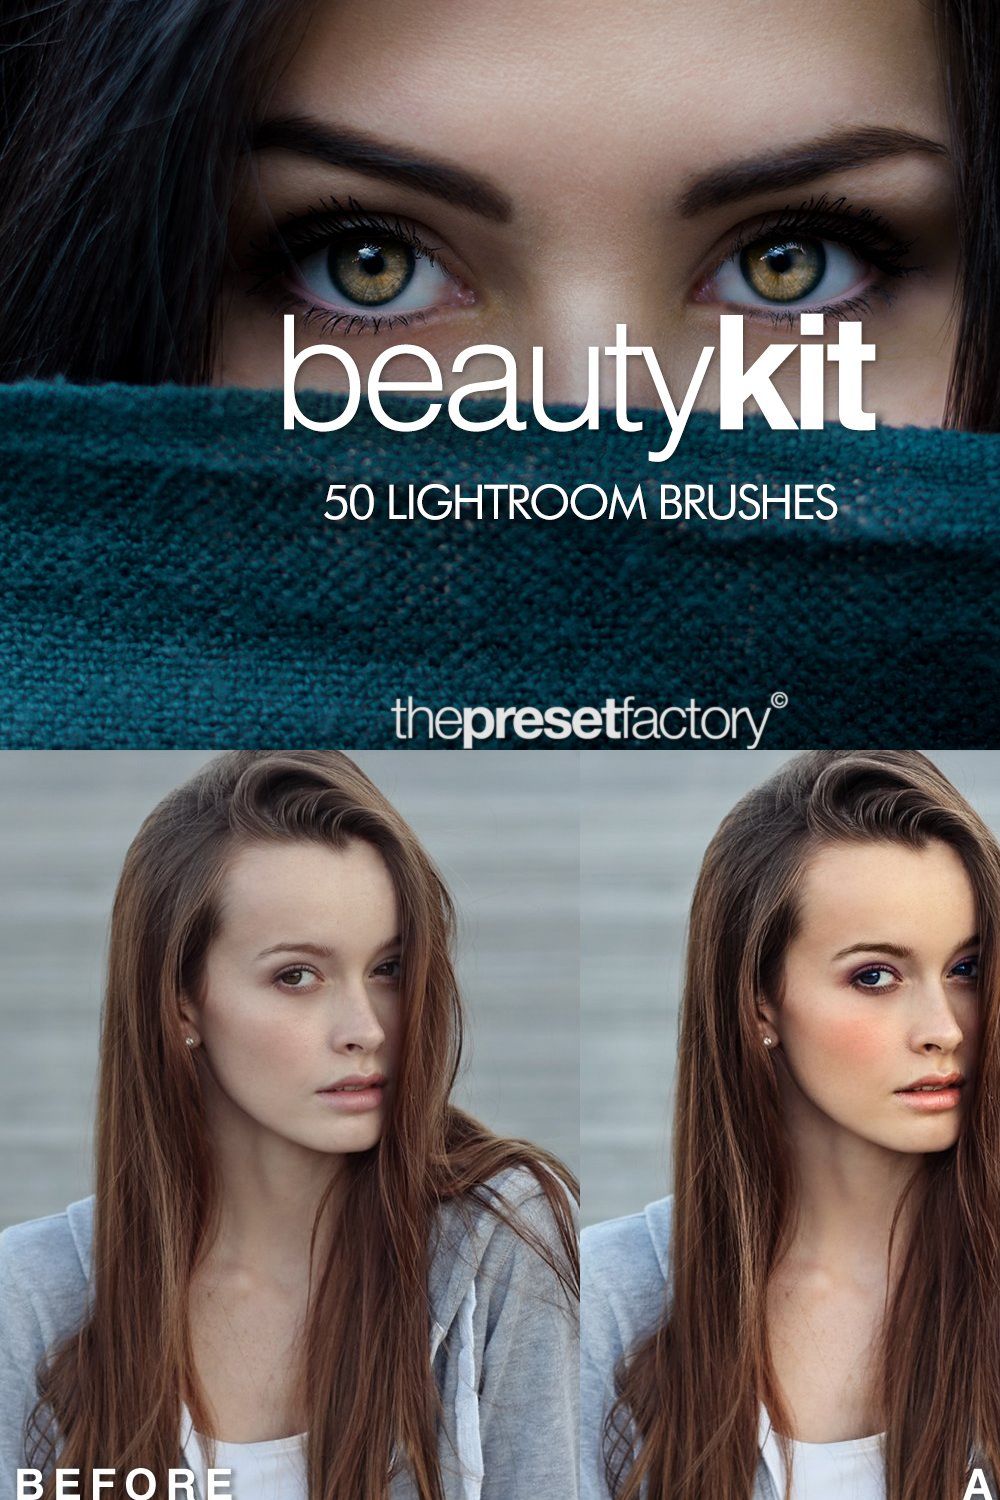 Beauty Kit - 50 Lightroom Brushes pinterest preview image.